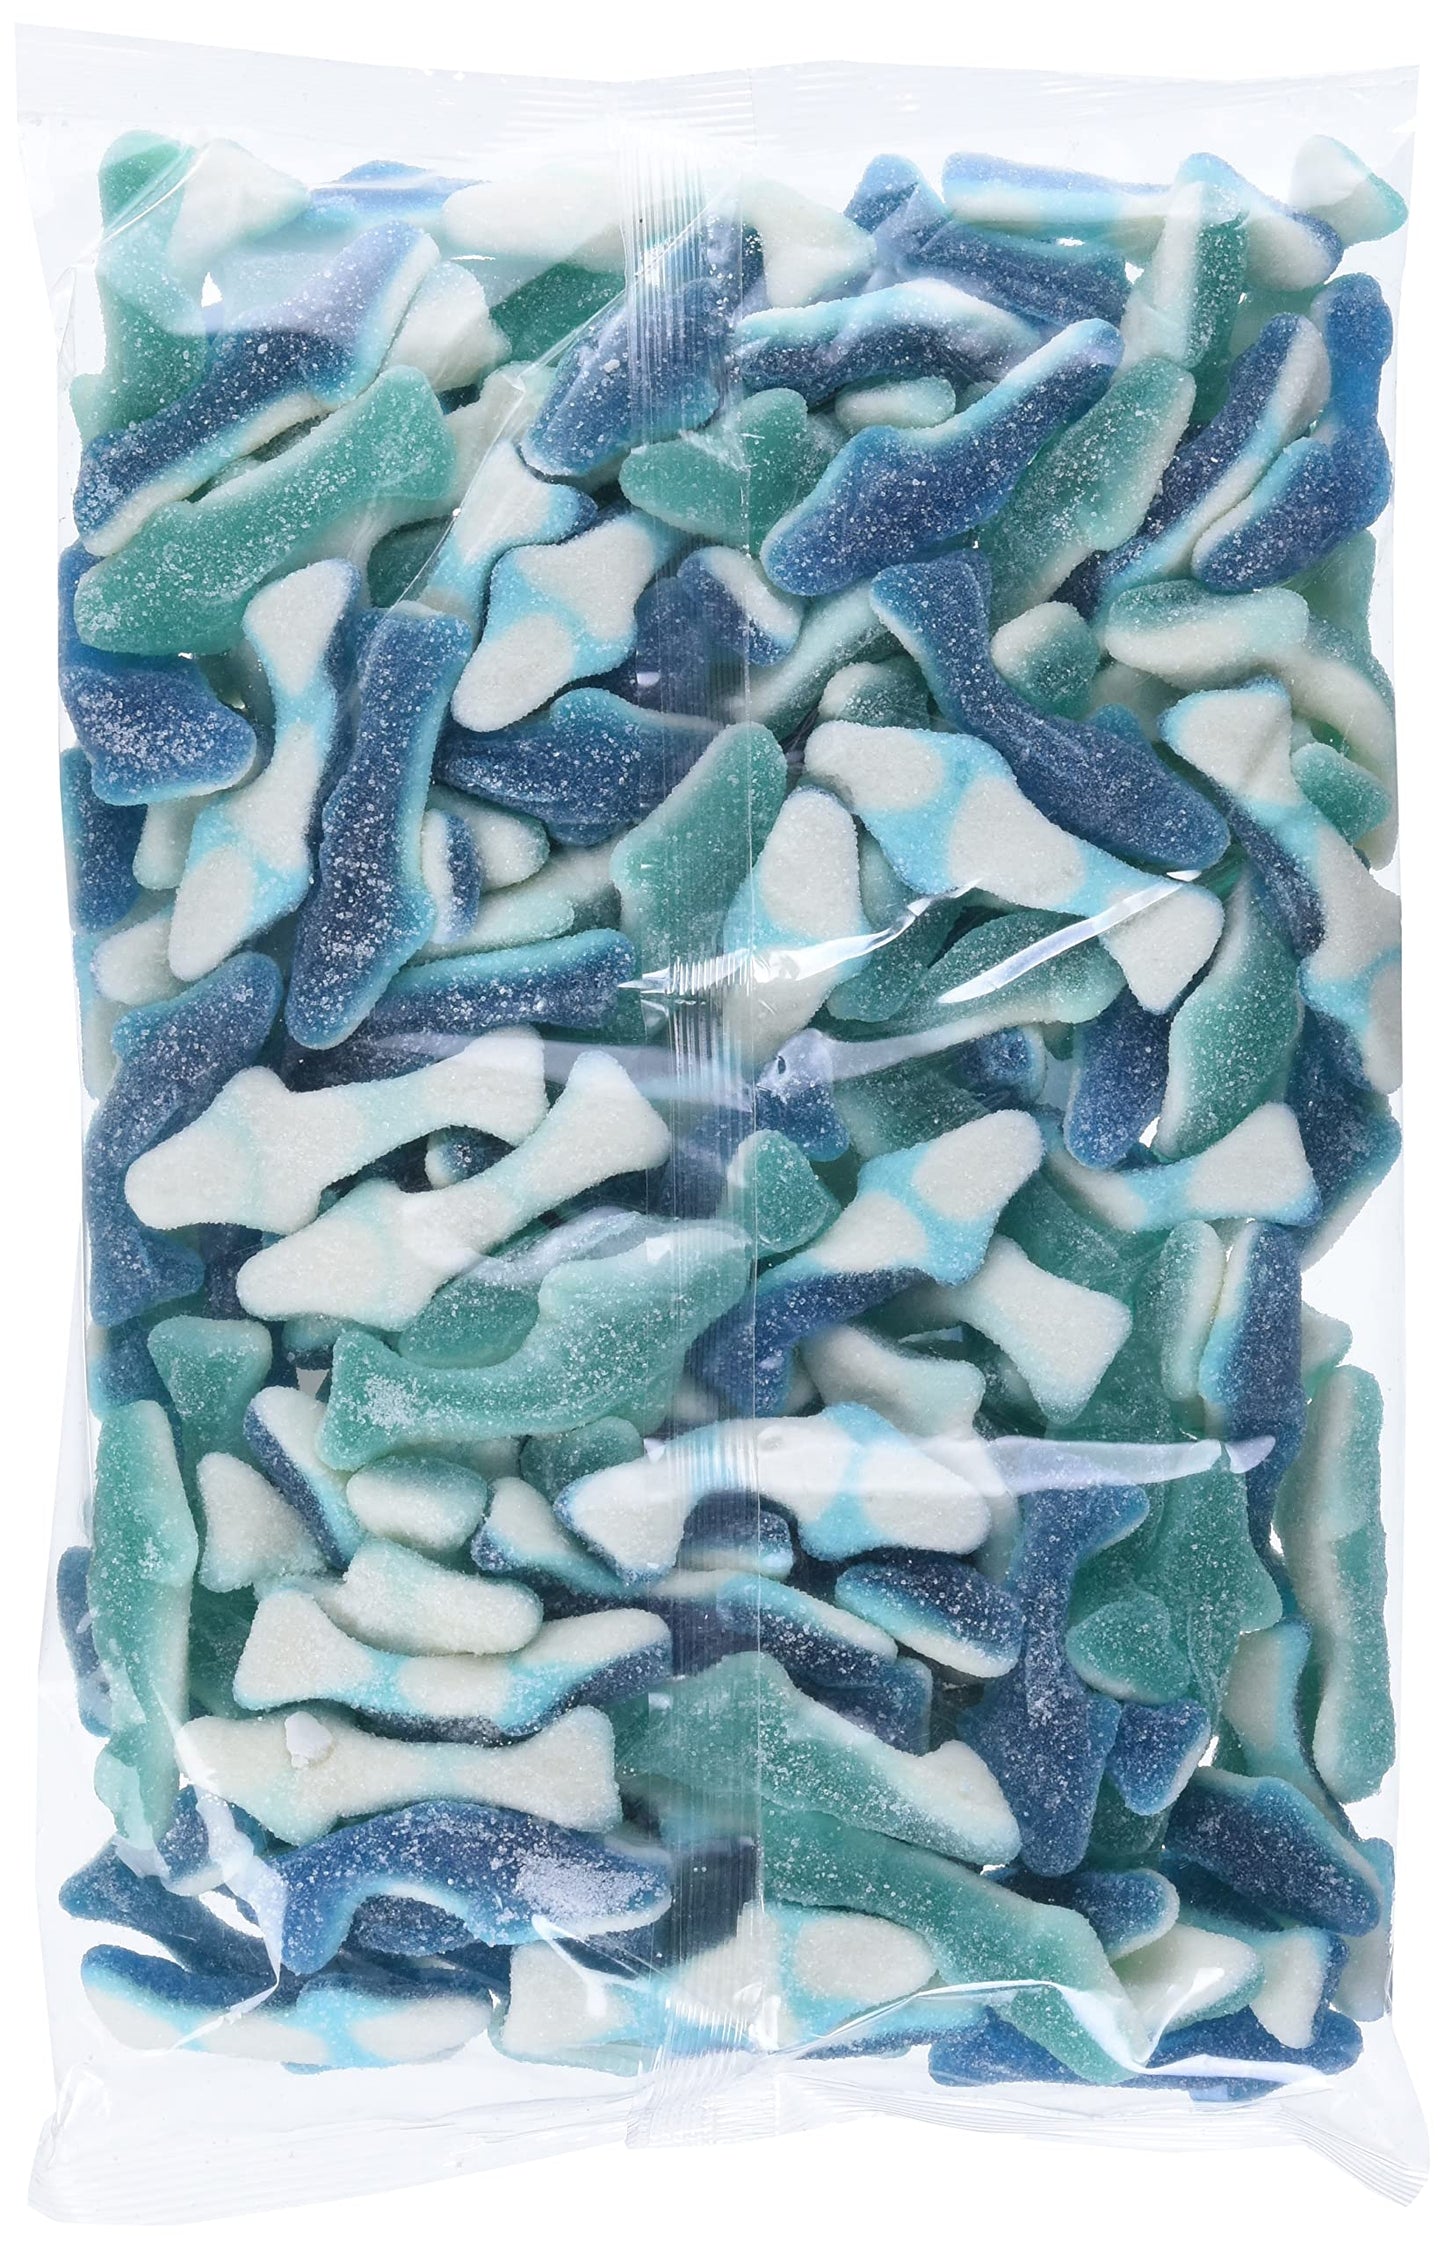 Sour Sharks Gummies Bulk Candy 1K/35.27oz (Shipped from Canada)